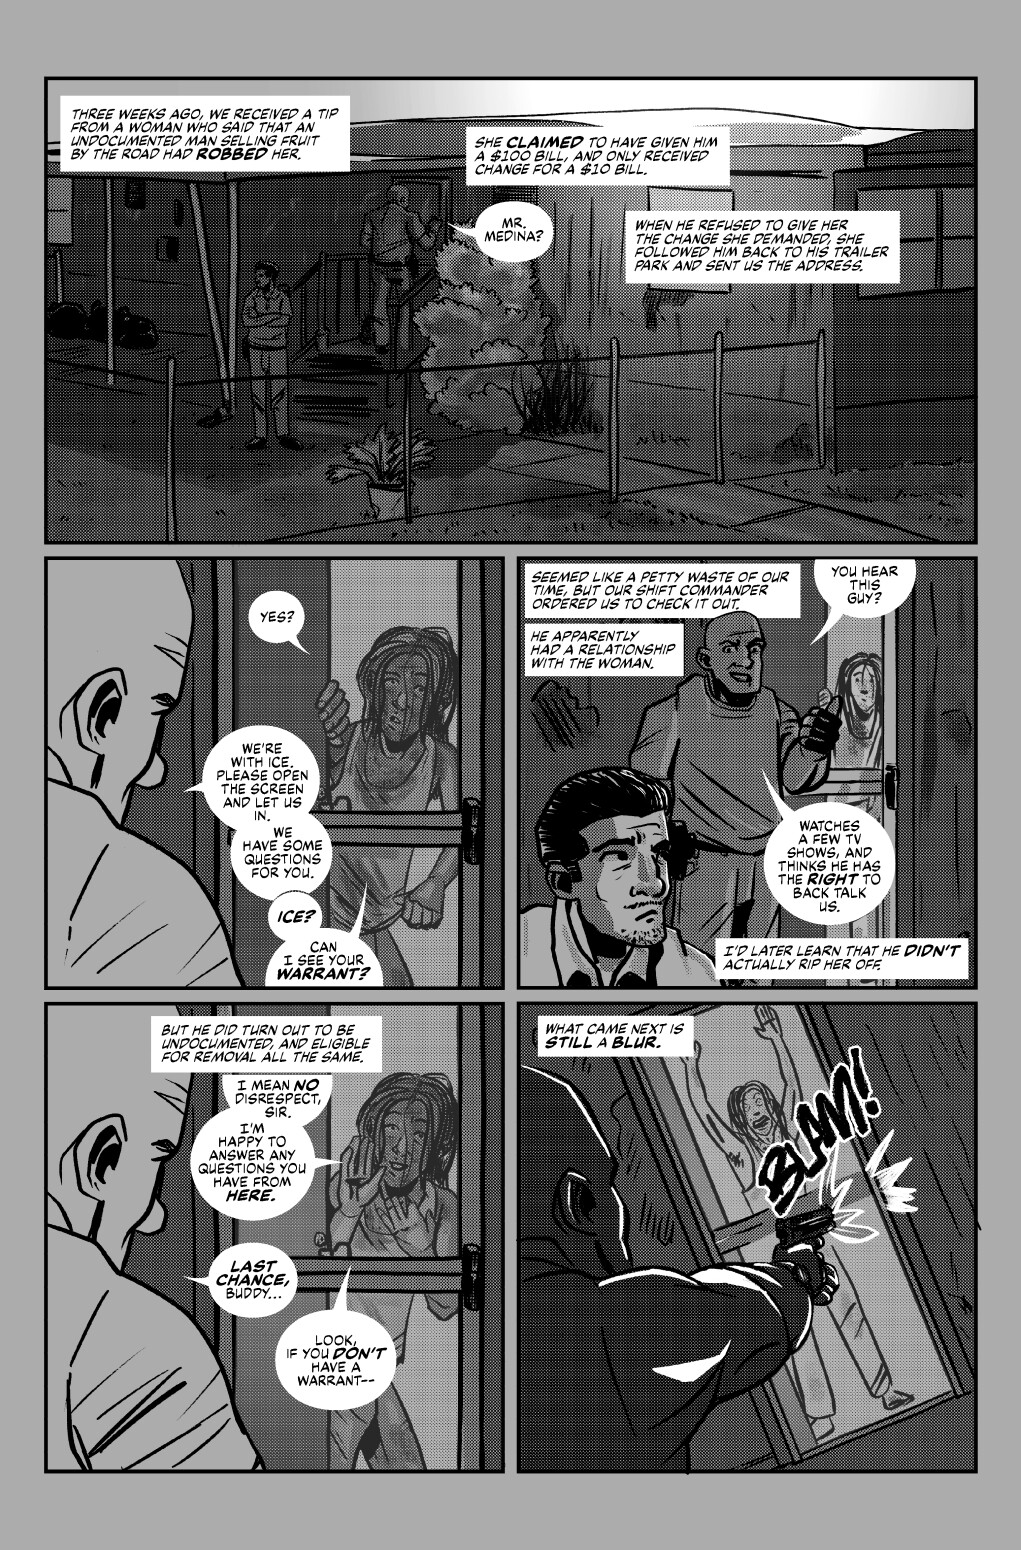 Sincerely, Agent Mejía: Page 8